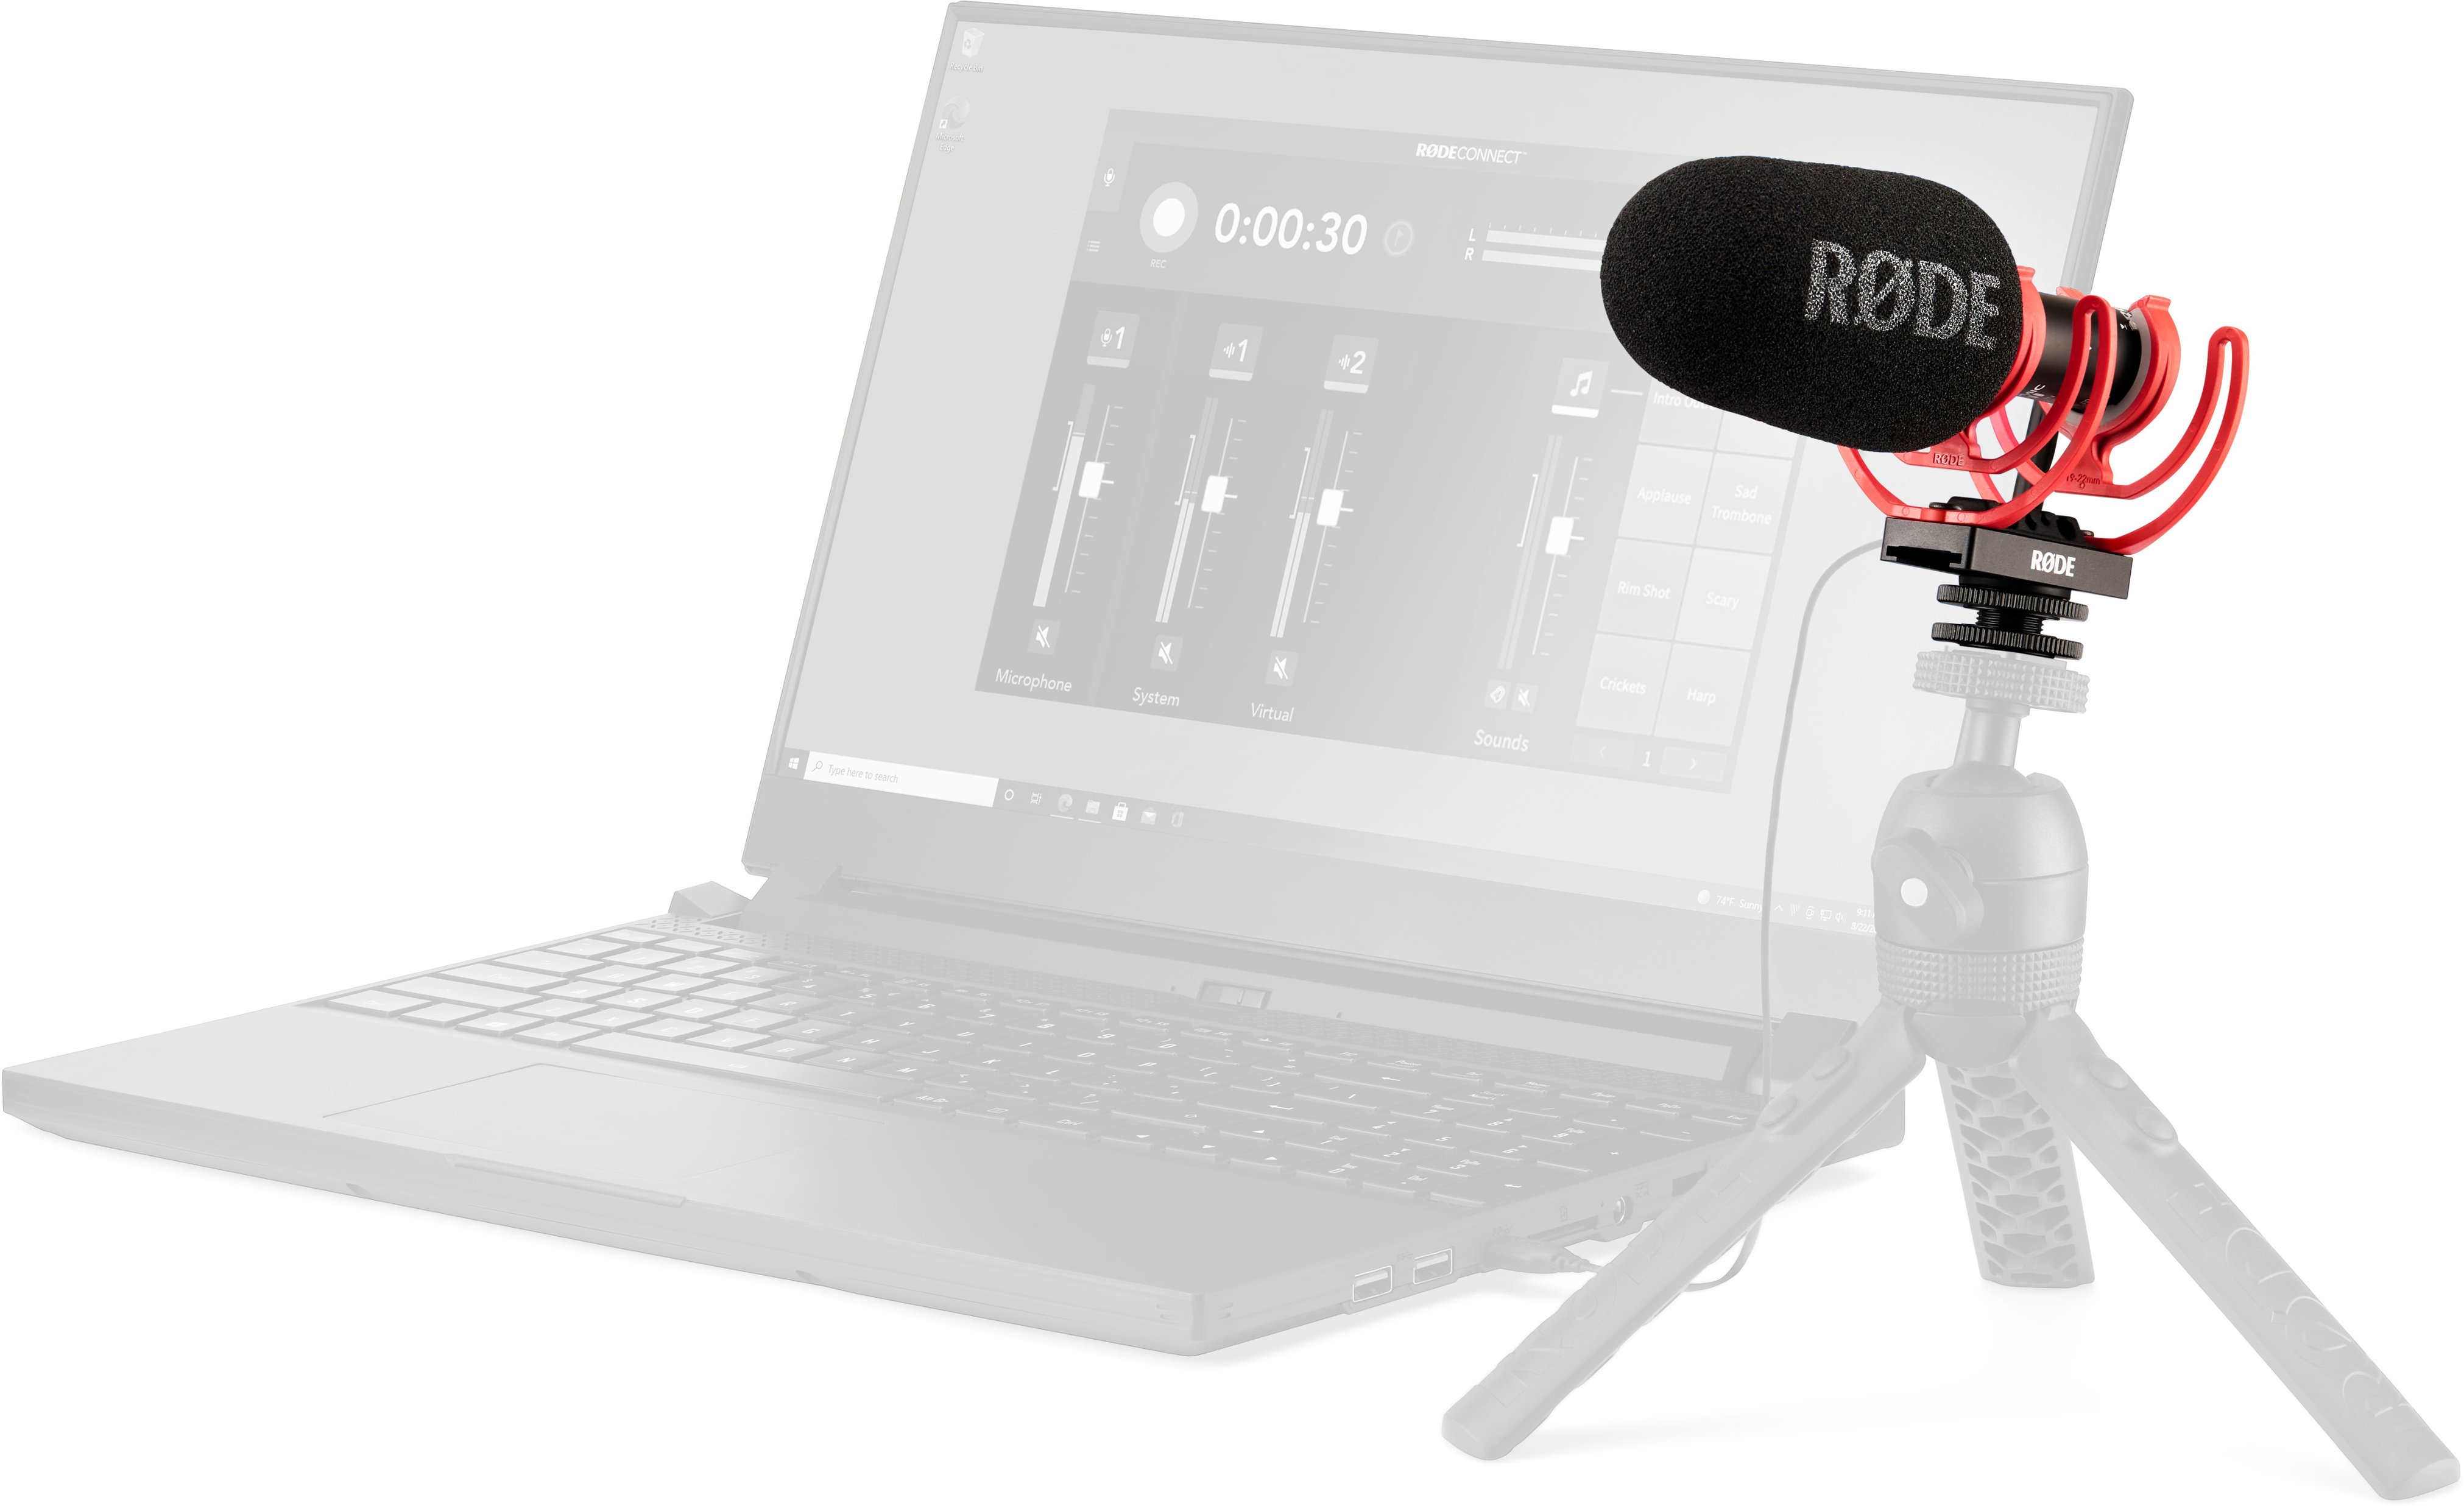 Rode VideoMic GO II Camera-Mount Lightweight Directional Microphone,Black